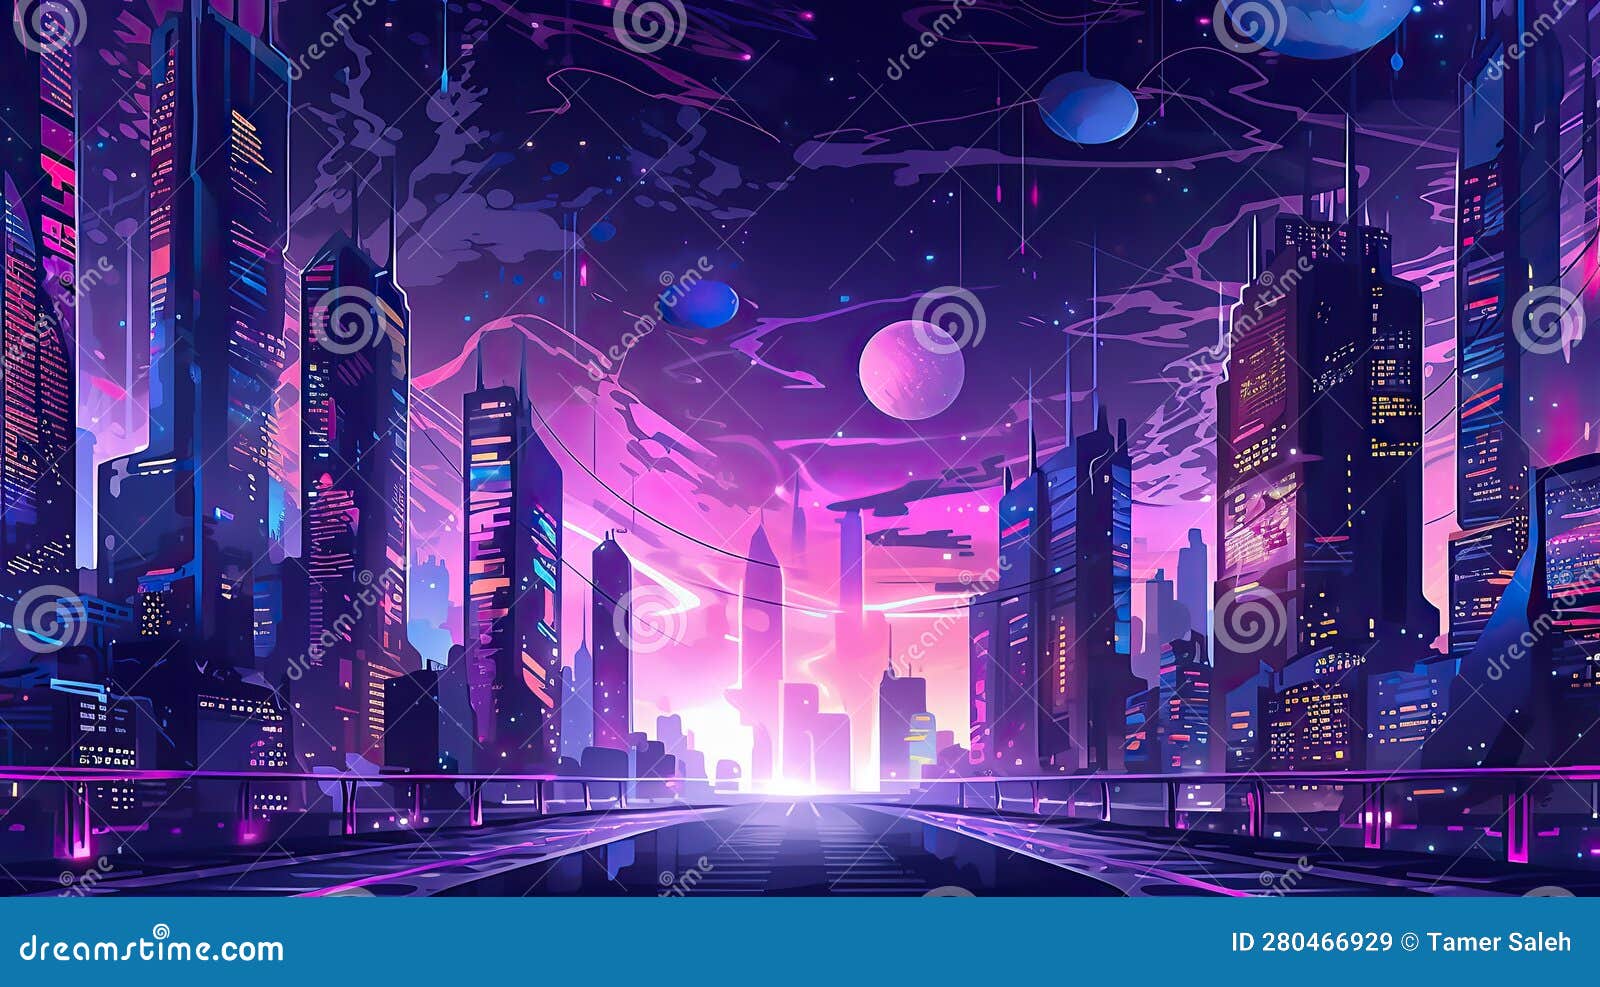 Cyberpunk City Art Purple Desktop Background Wallpaper Stock ...